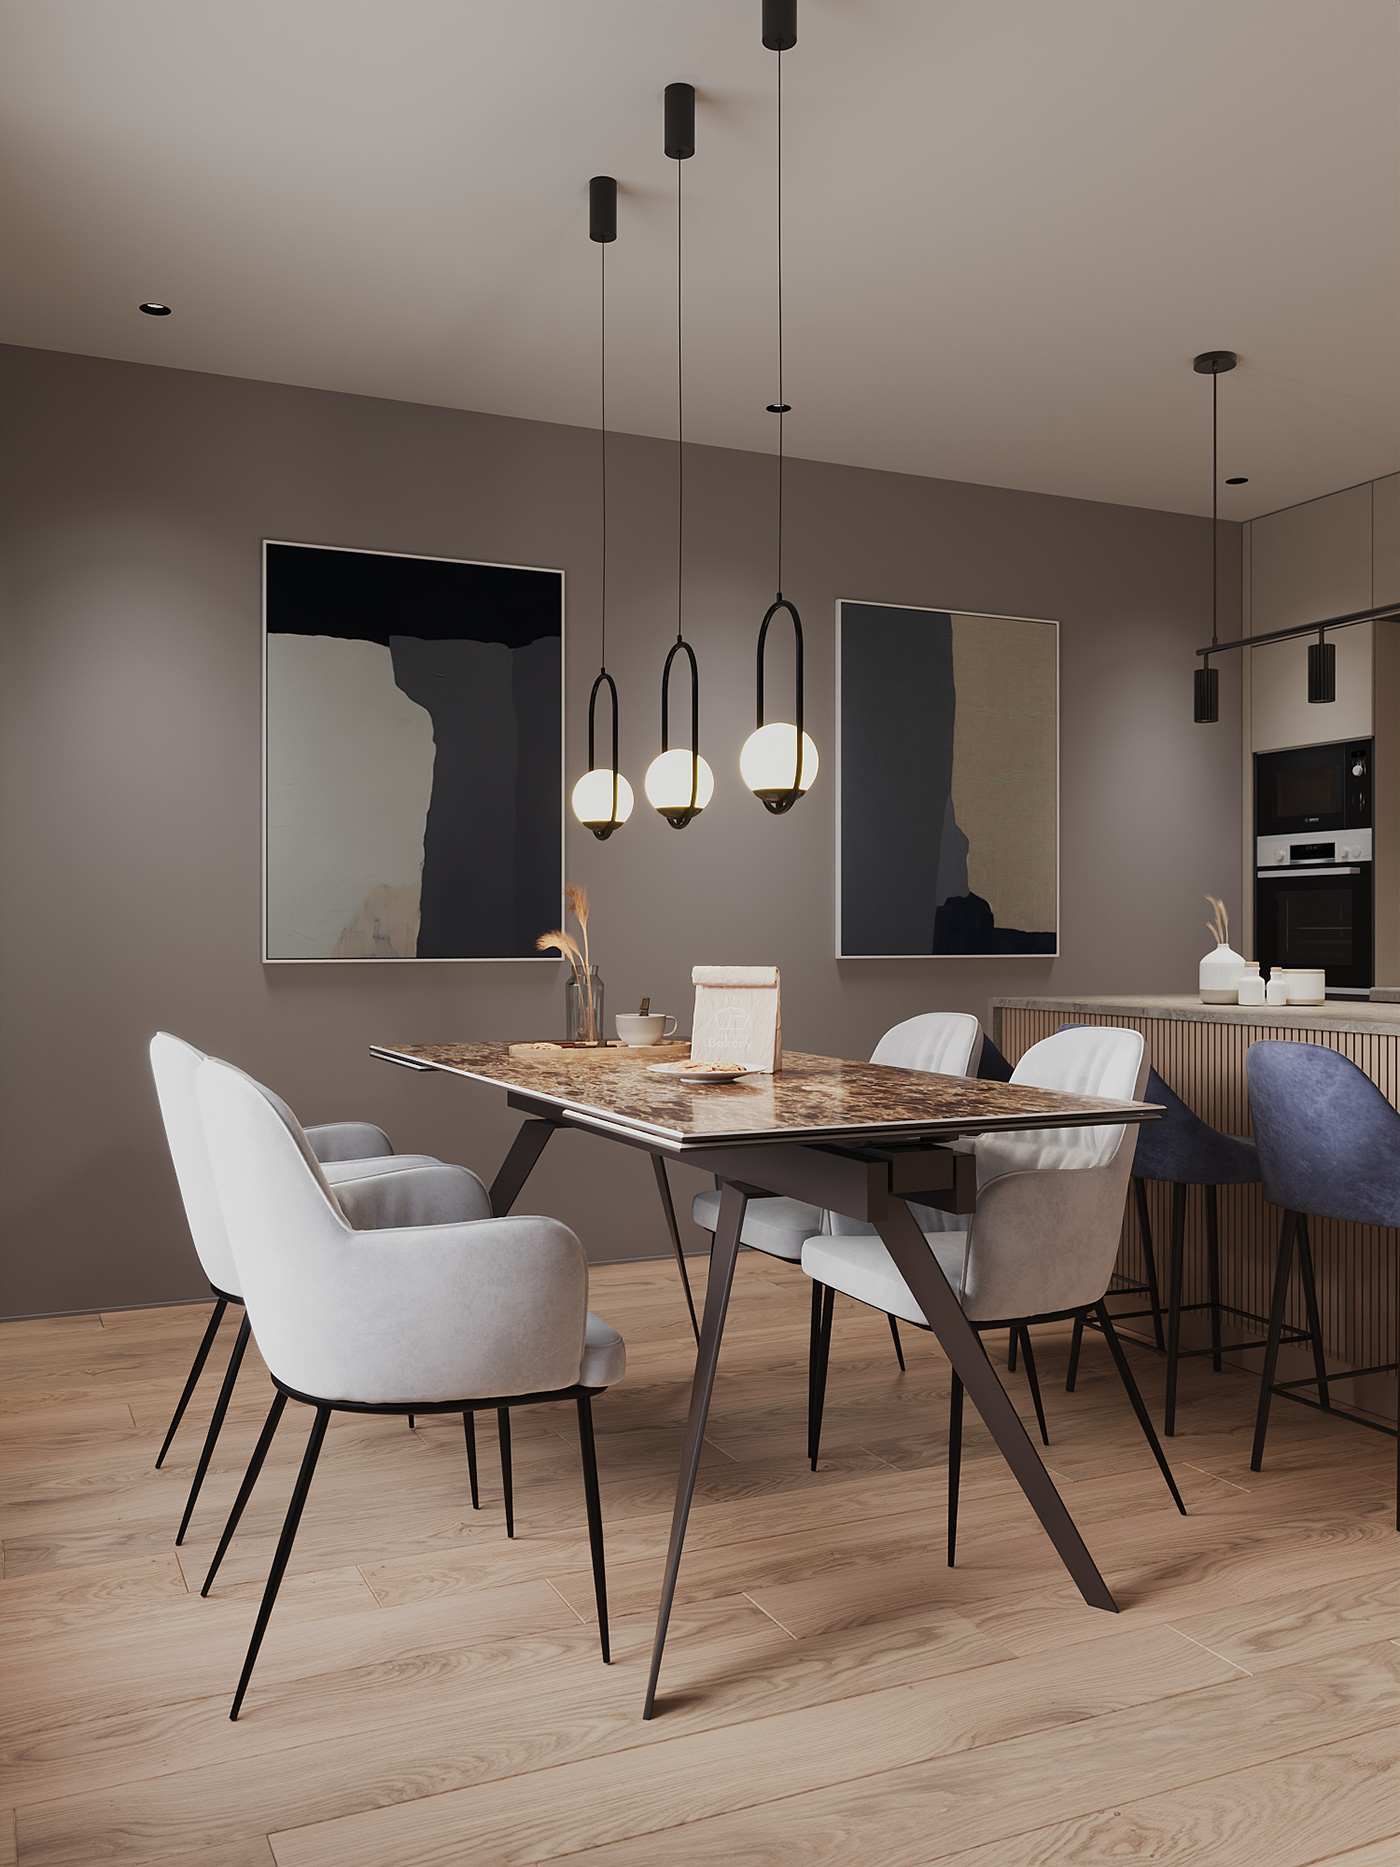 3ds max visualization Render 3D CGI Interior kitchen living room